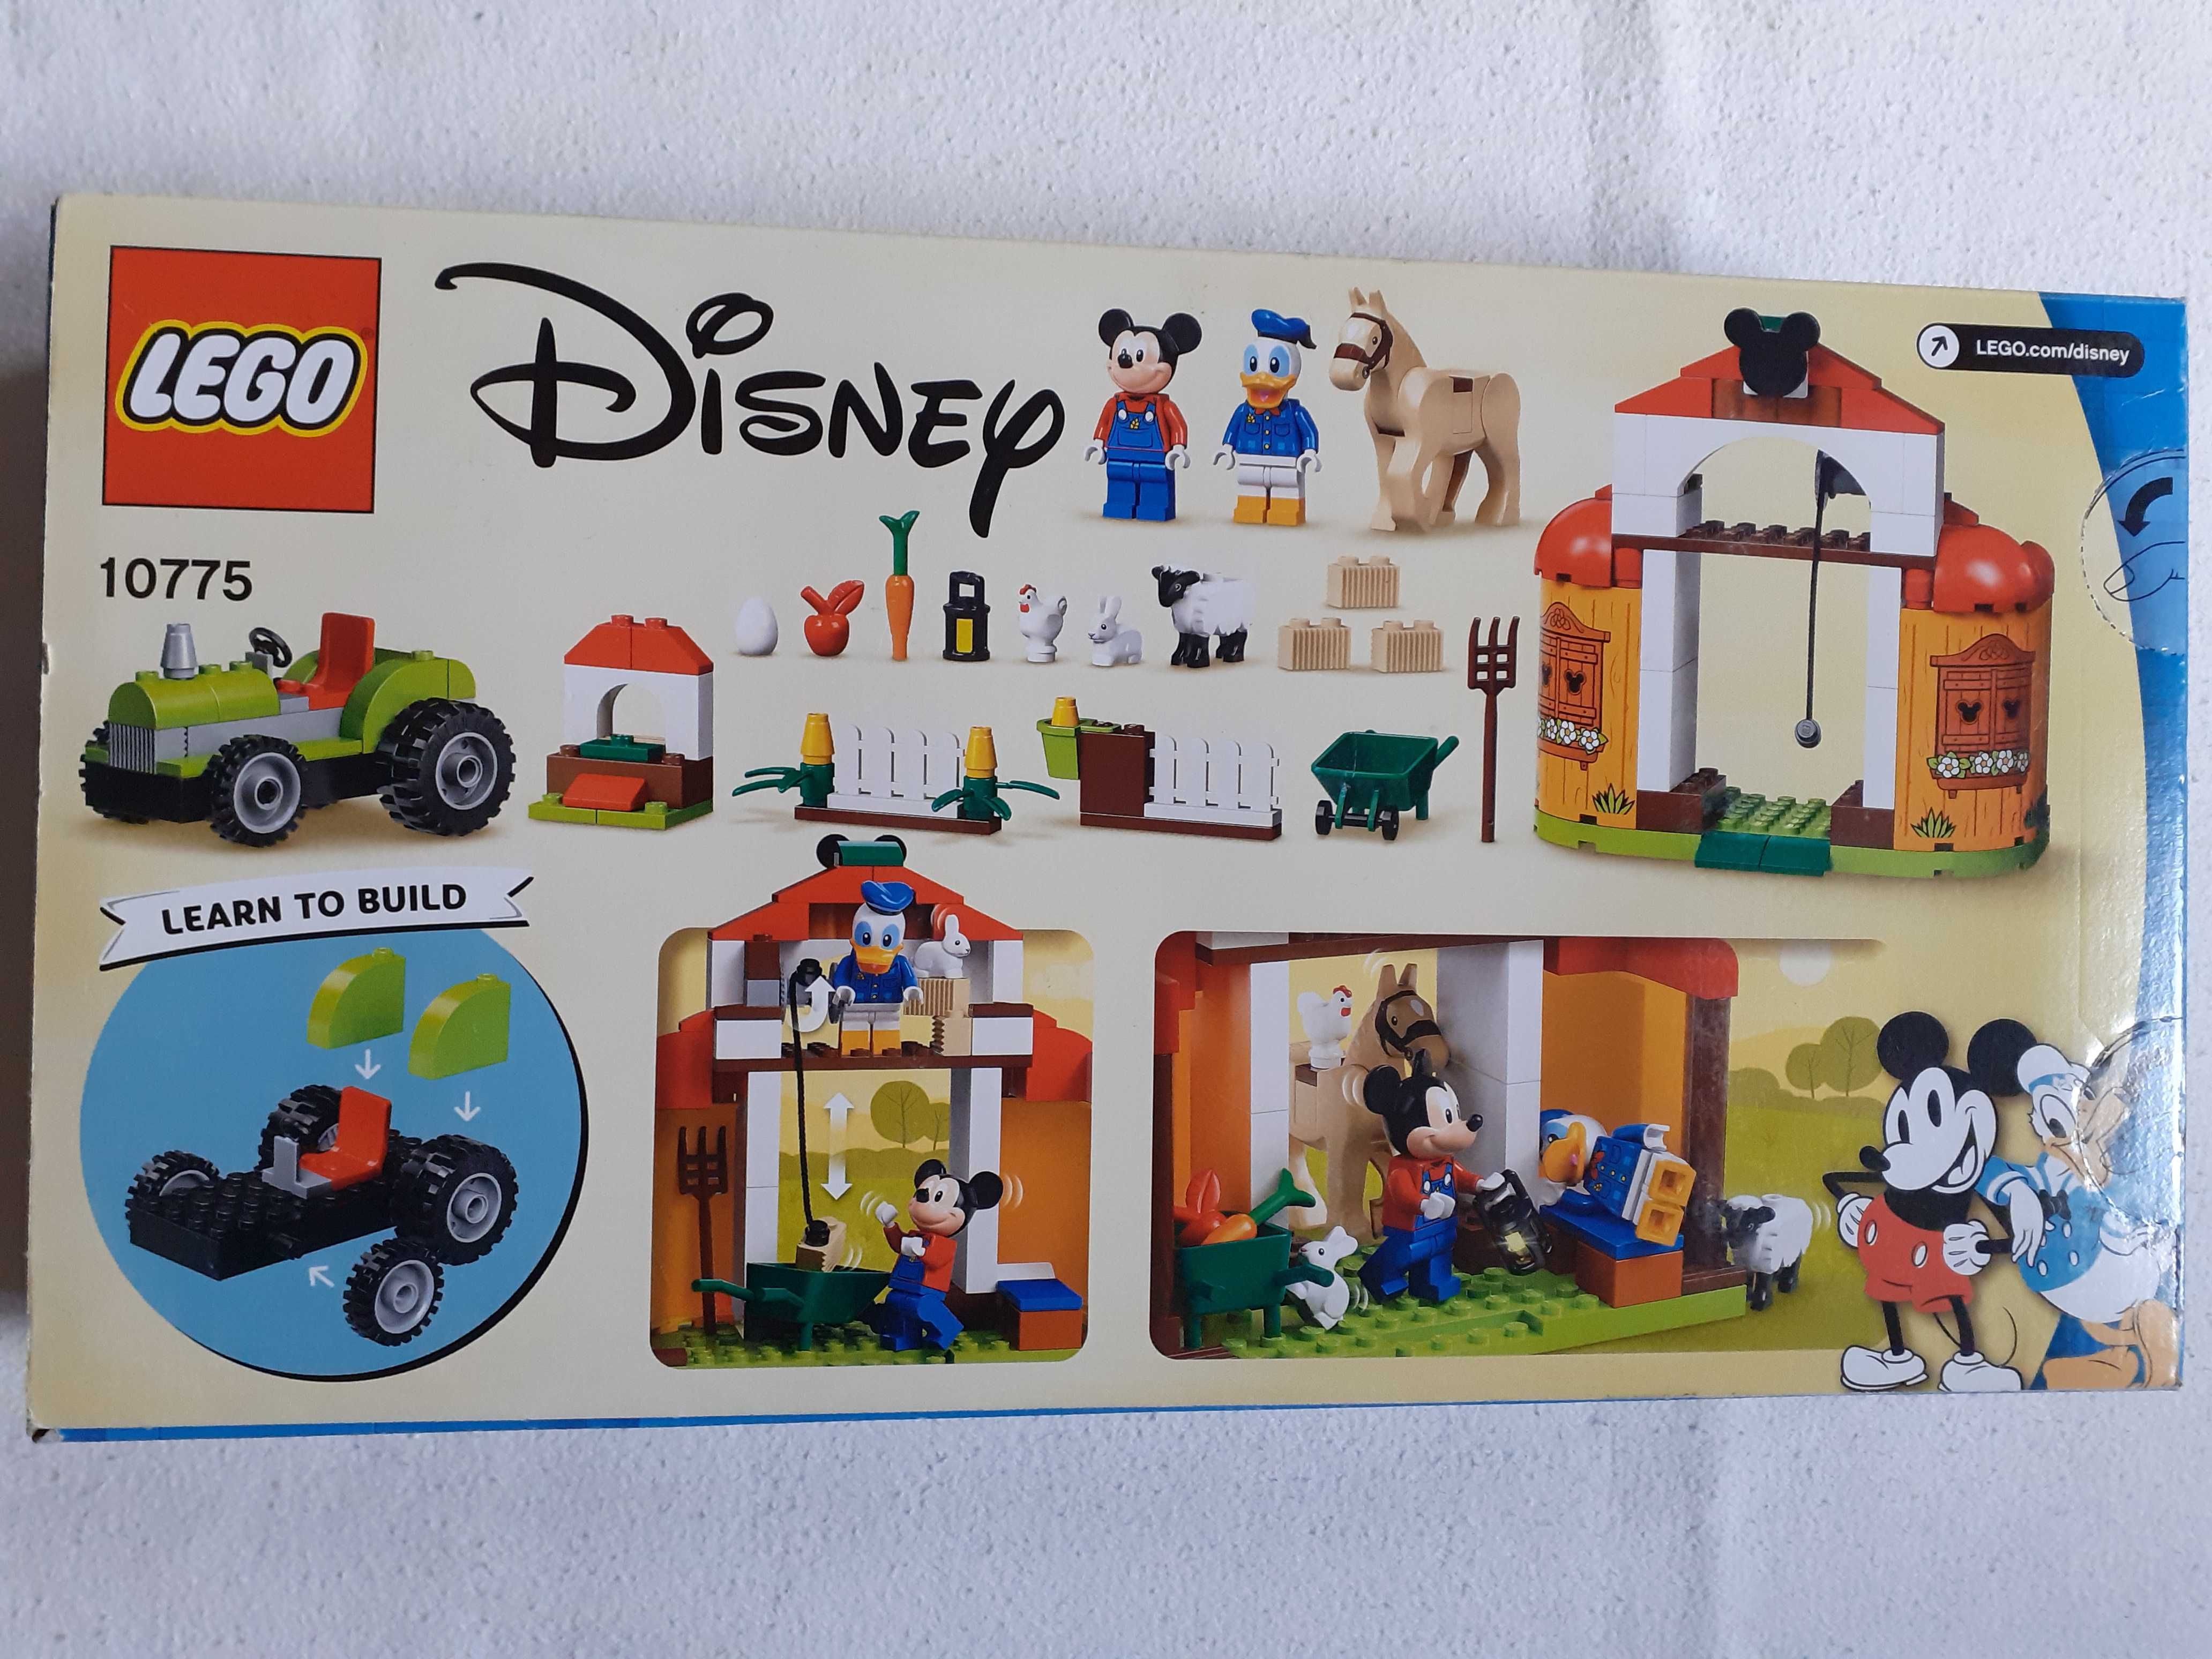 Lego Disney 10775 Ferma lui Mickey si Donald, set nou,sigilat,de cadou